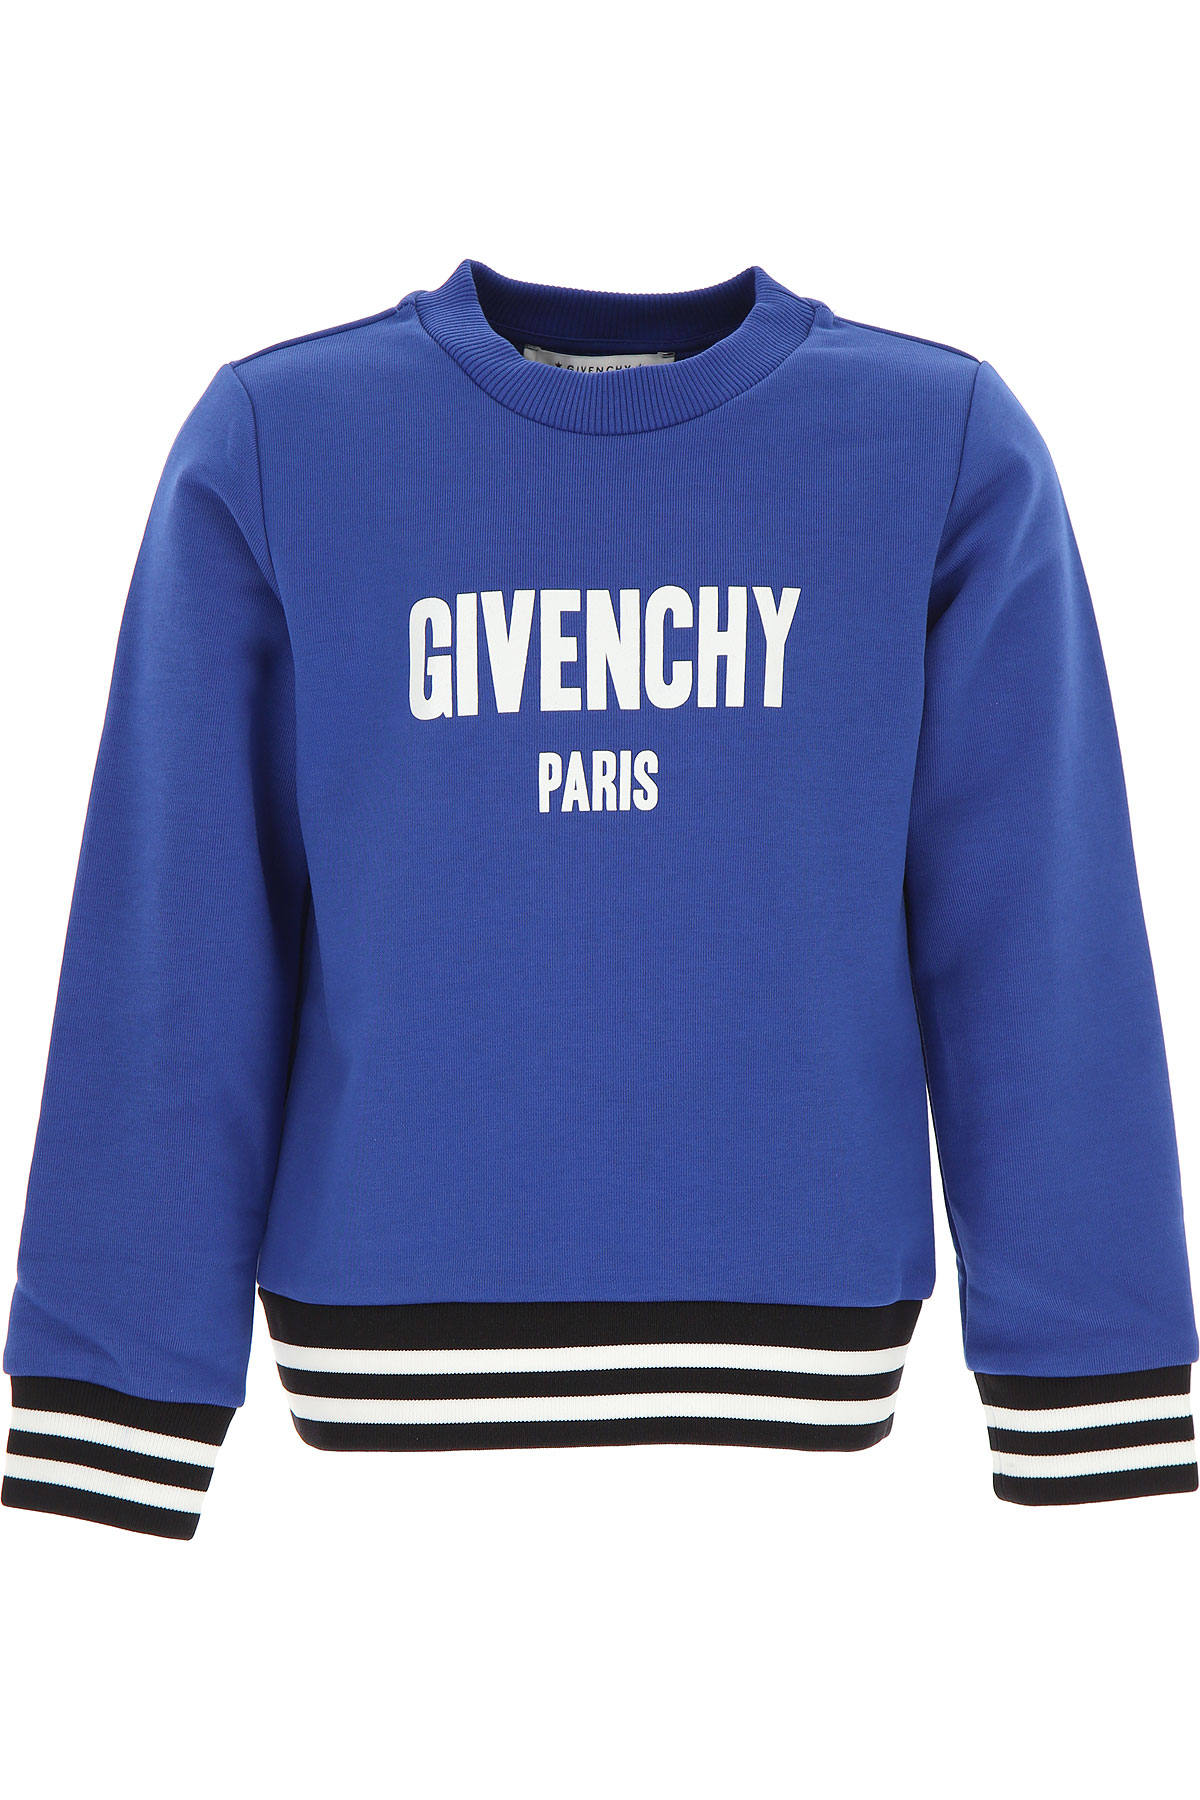 Kidswear Givenchy, Style code: h15063-81f-